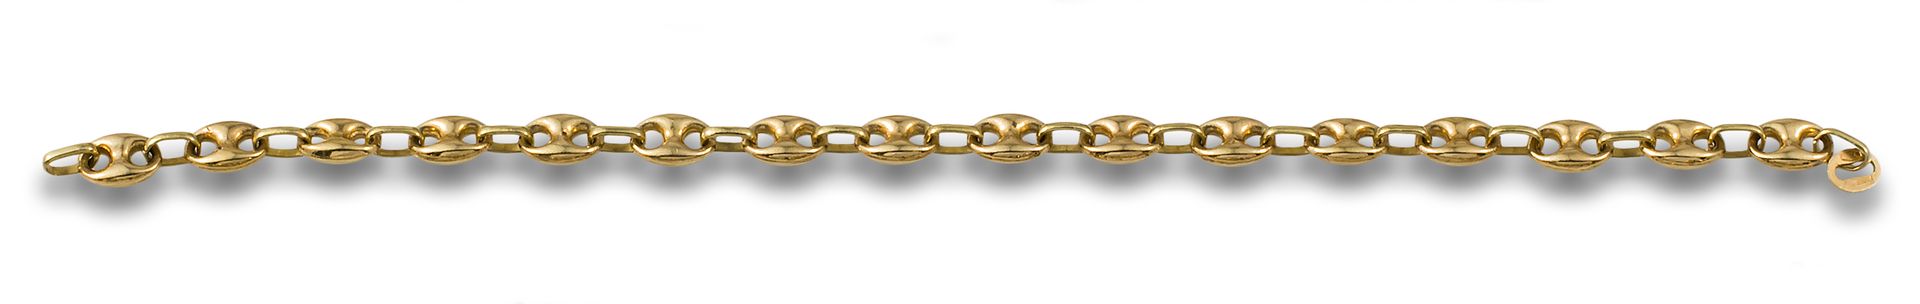 CALABROTE GOLD BRACELET 18kt yellow gold bracelet with calabash design (clasp mi&hellip;